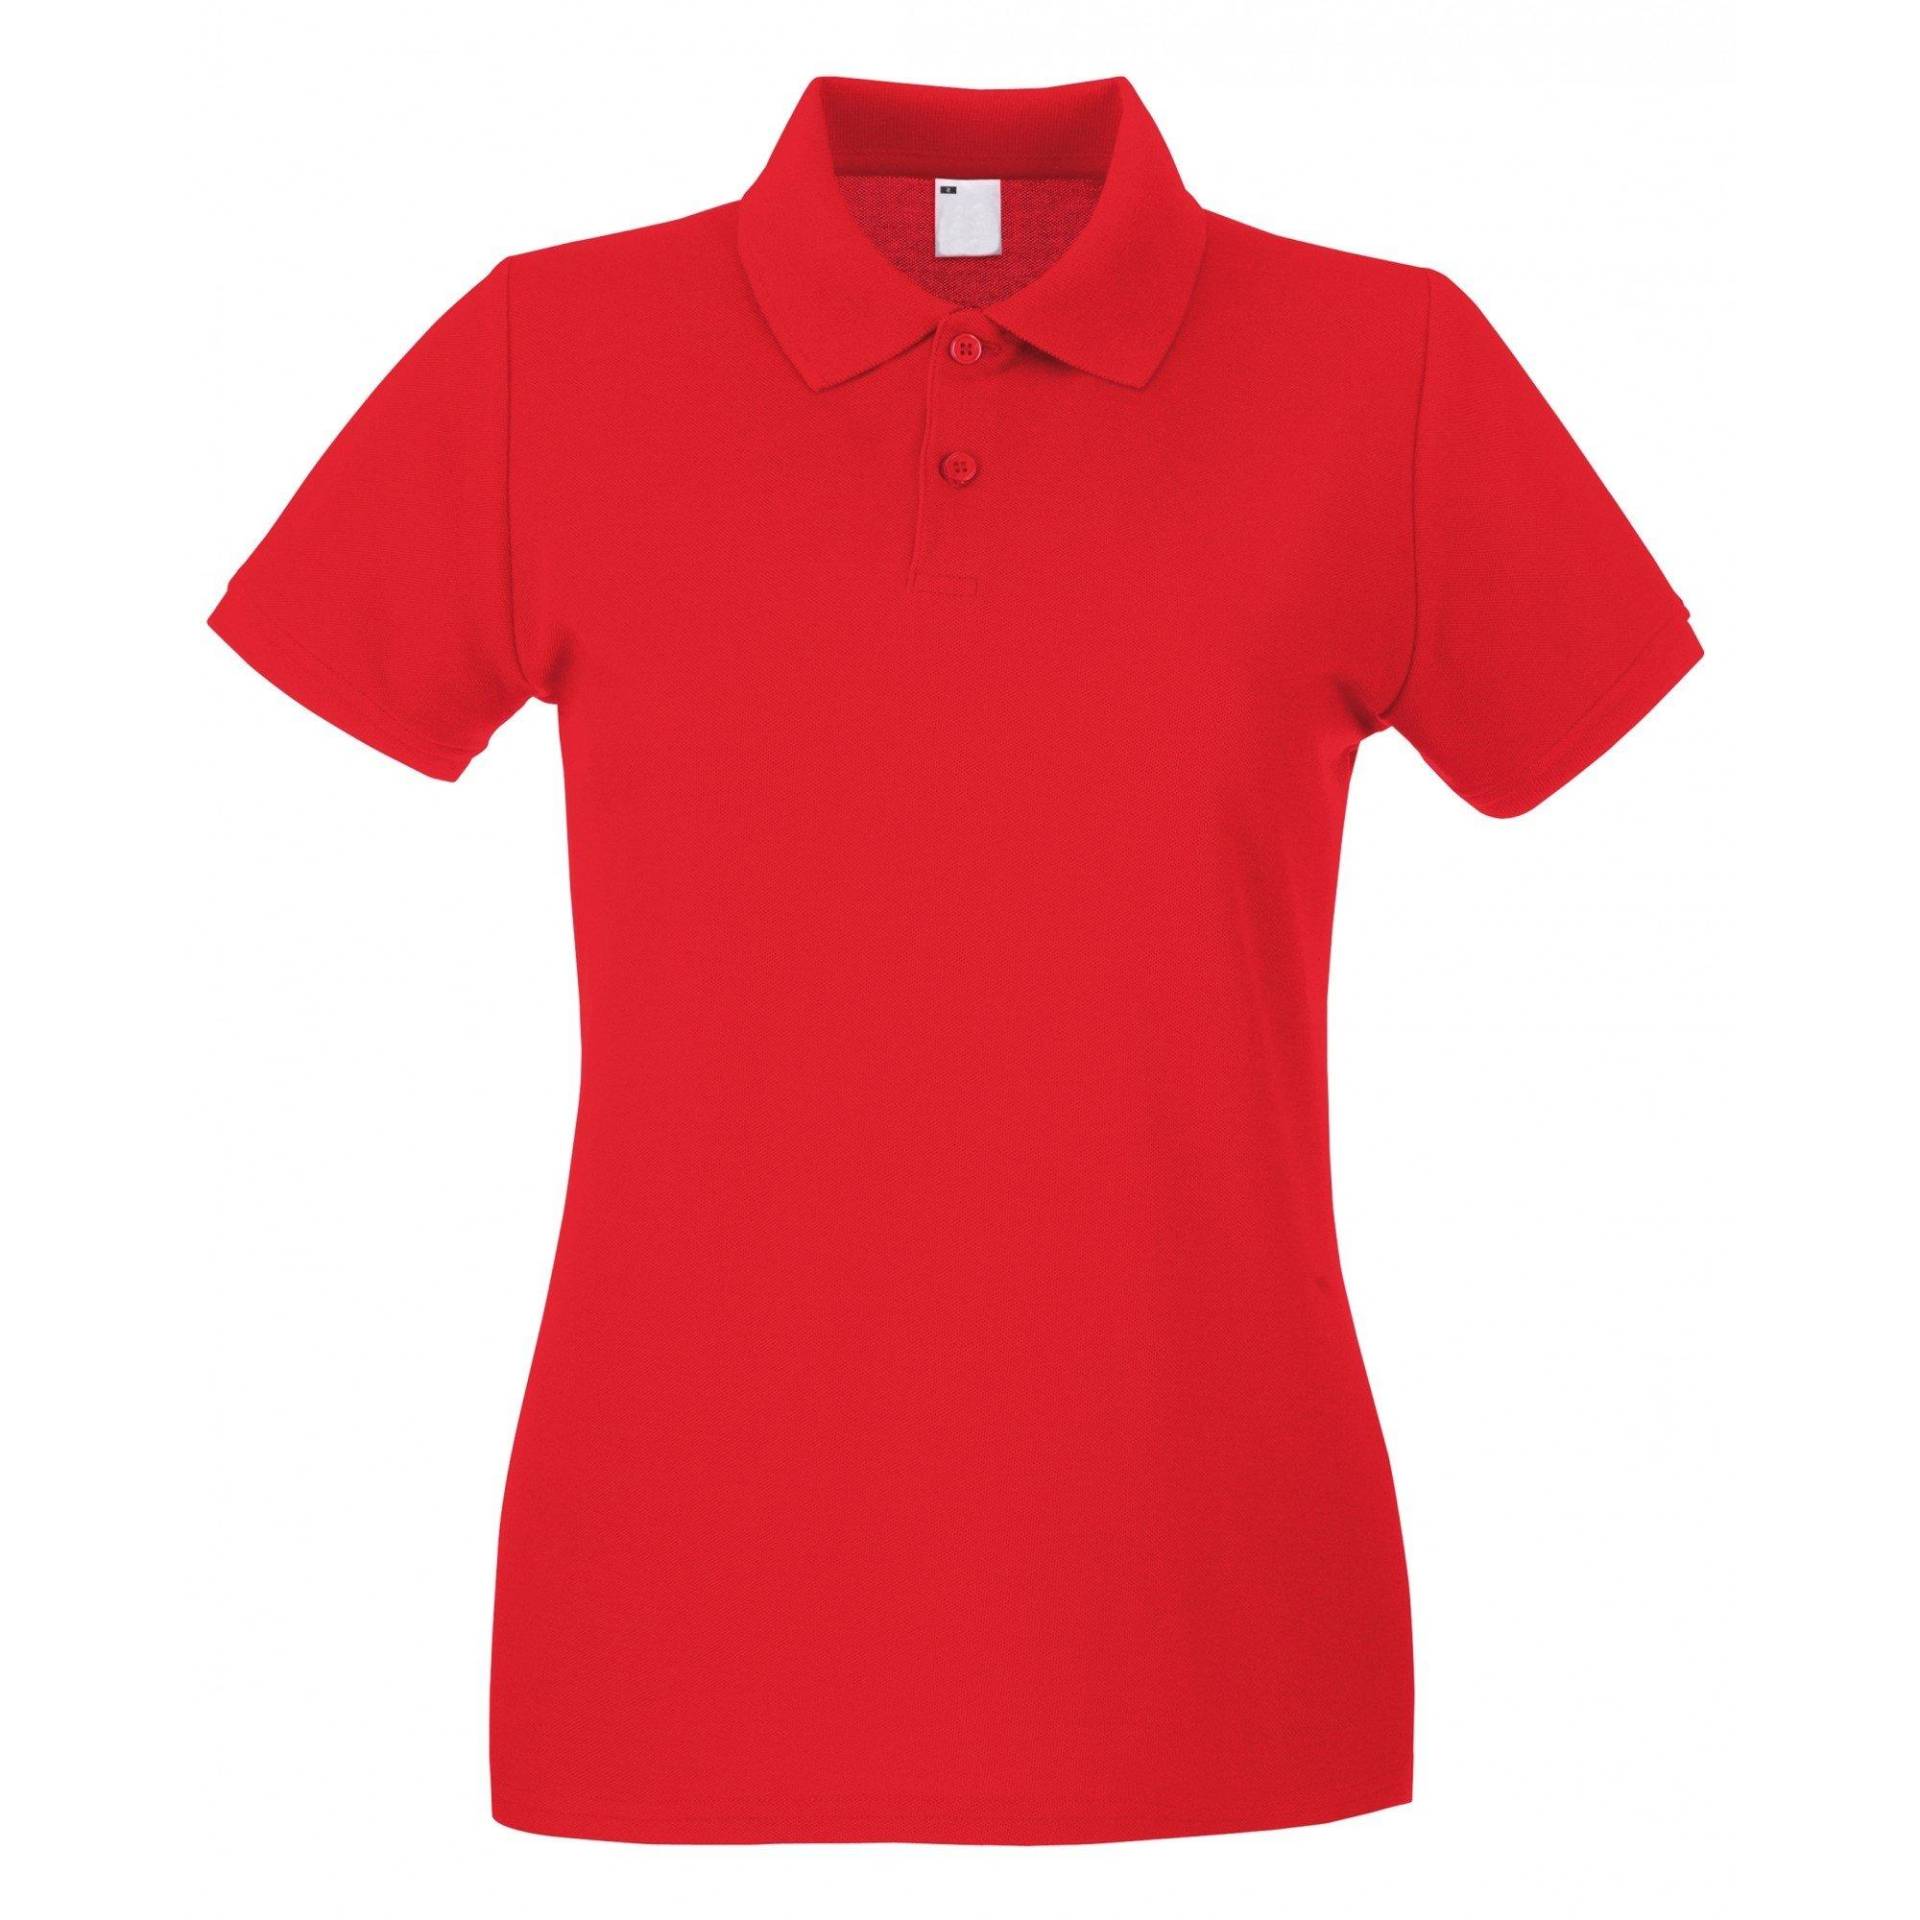 Poloshirt, Figurbetont, Kurzärmlig Damen Rot Bunt XXL von Universal Textiles